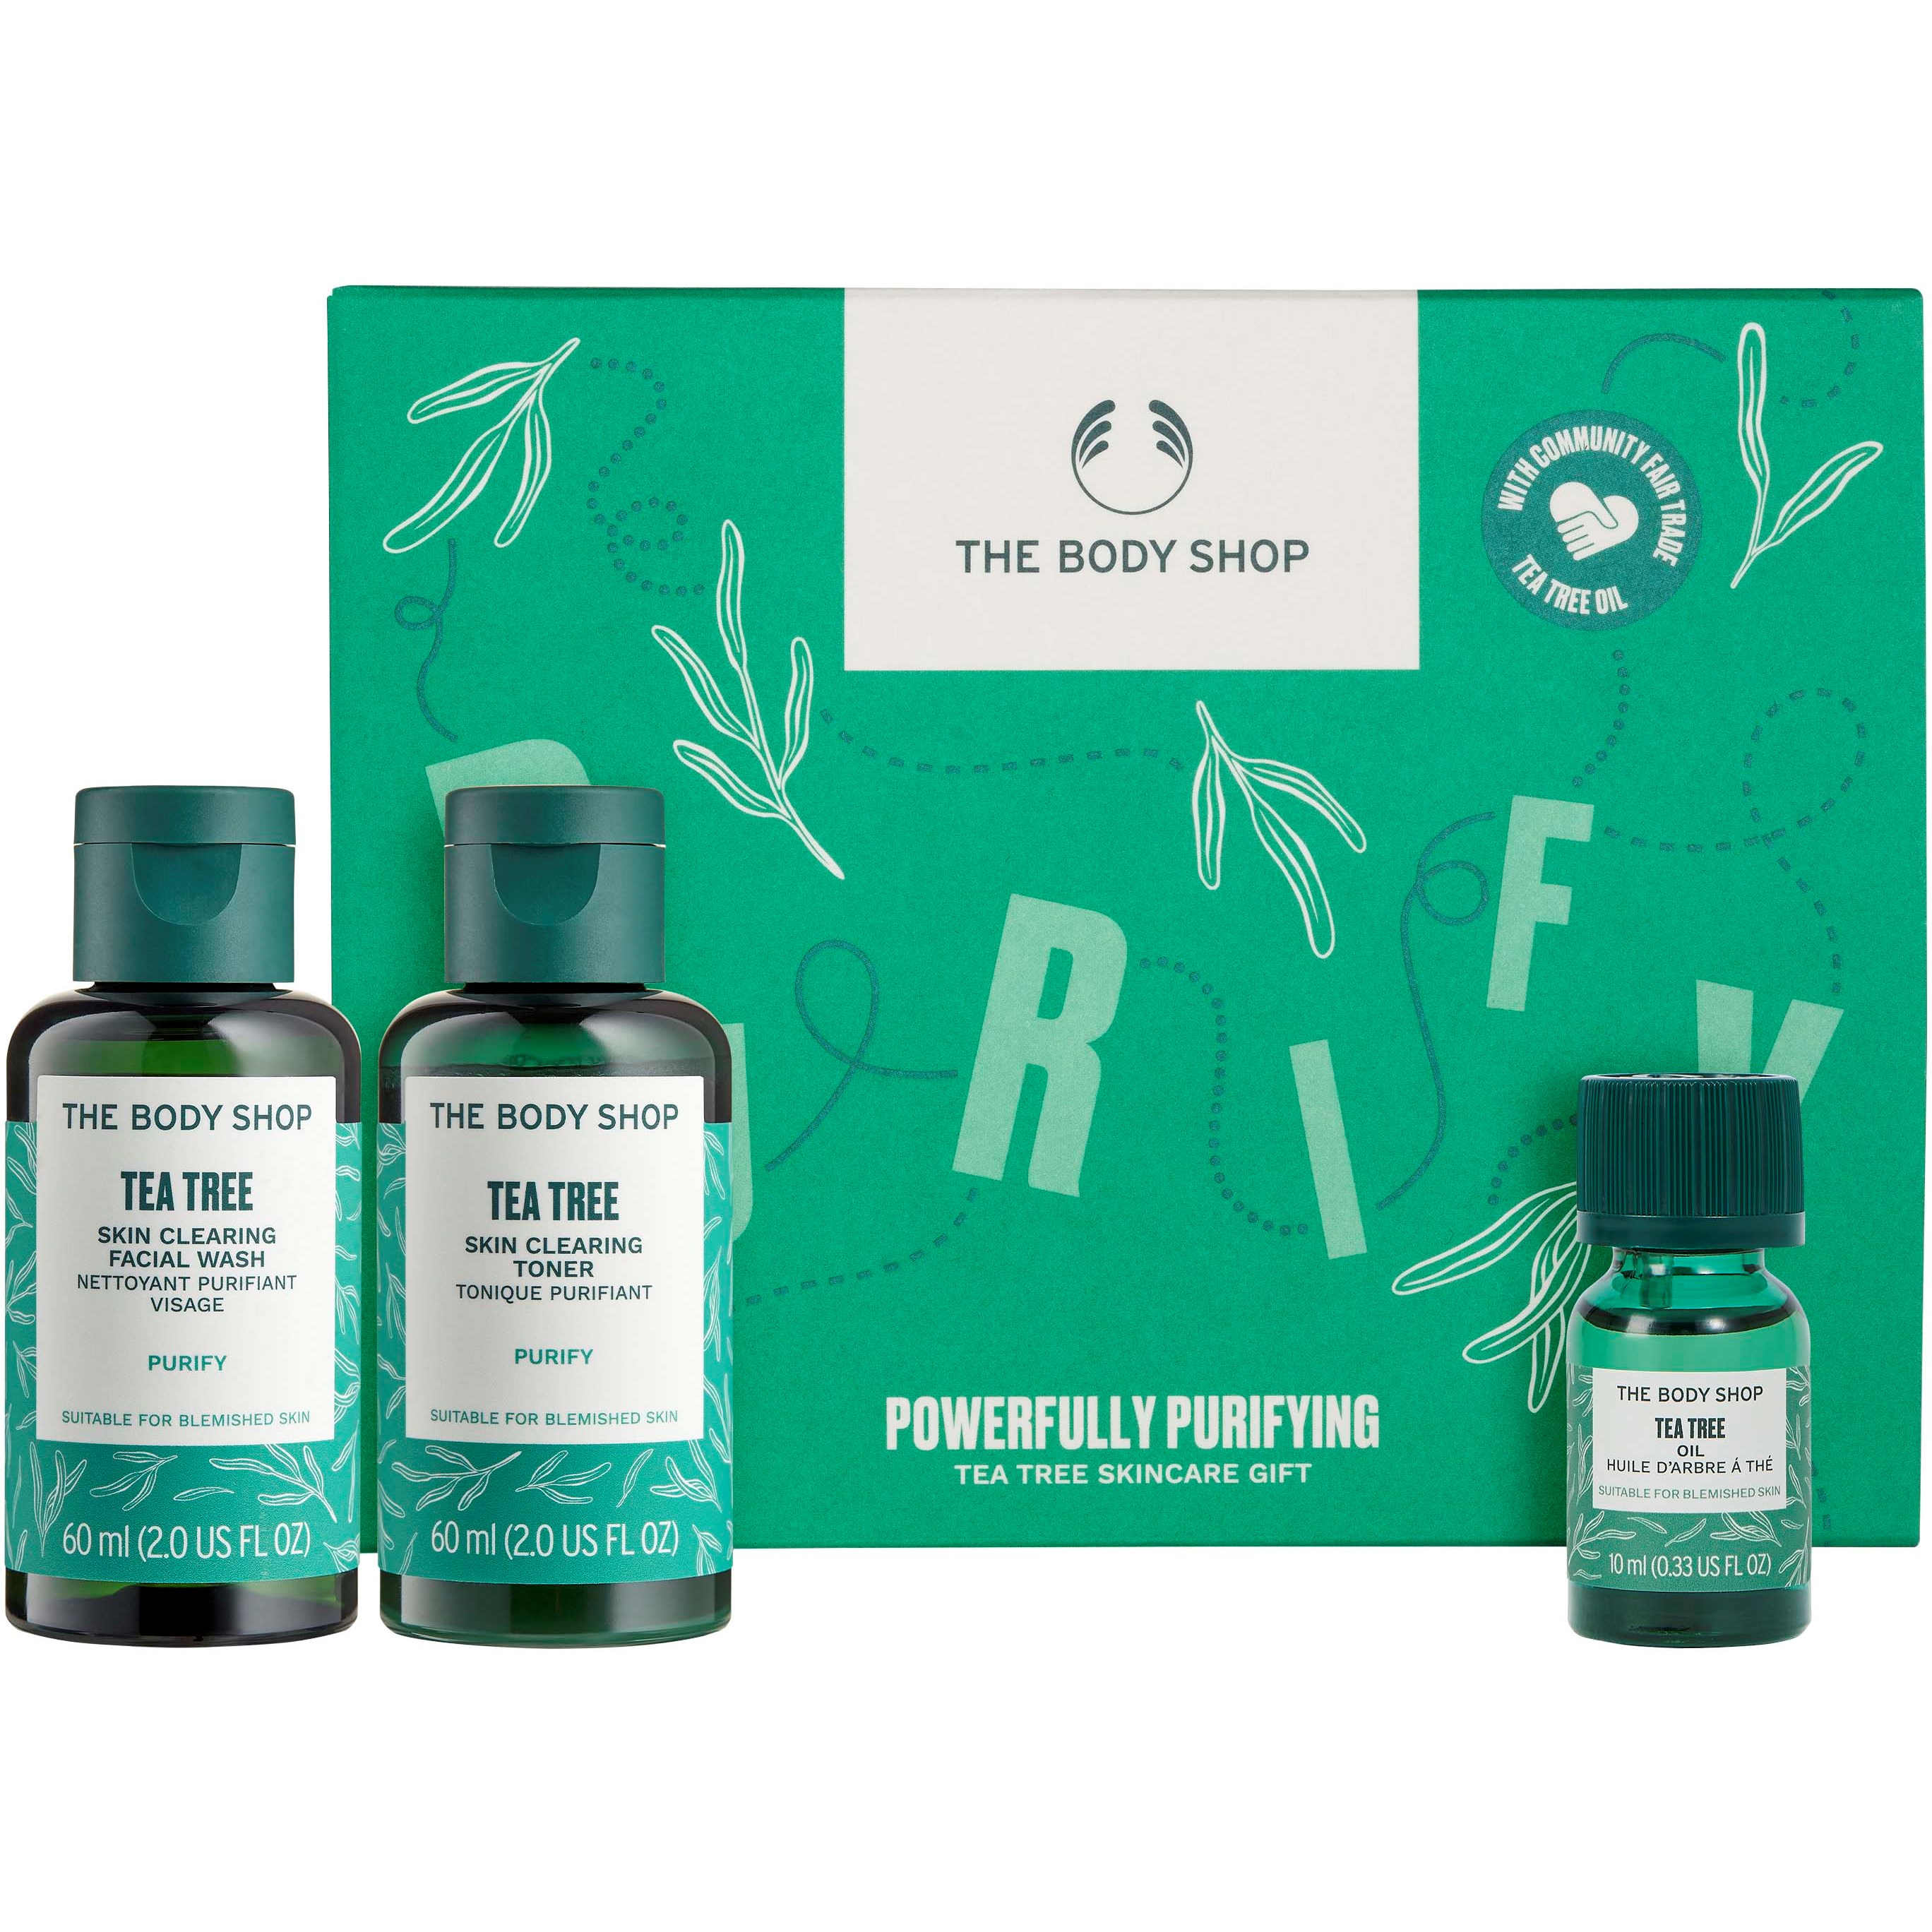 The Body Shop Tea Tree Powerfully Purifying Tea Tree Skincare Gift